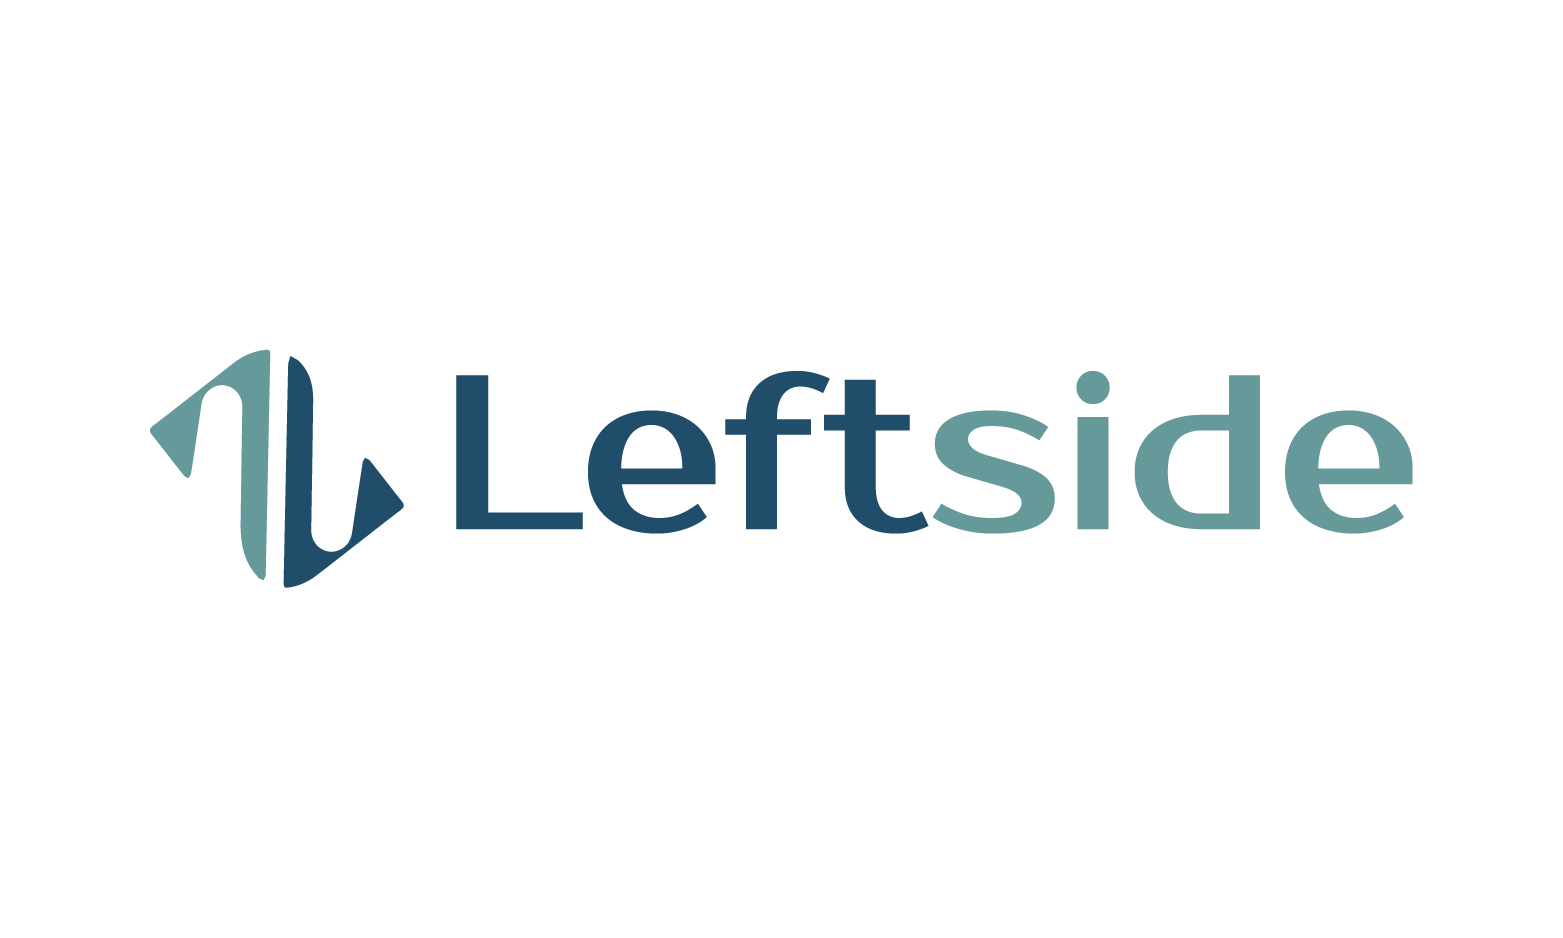 Leftside.com - Creative brandable domain for sale